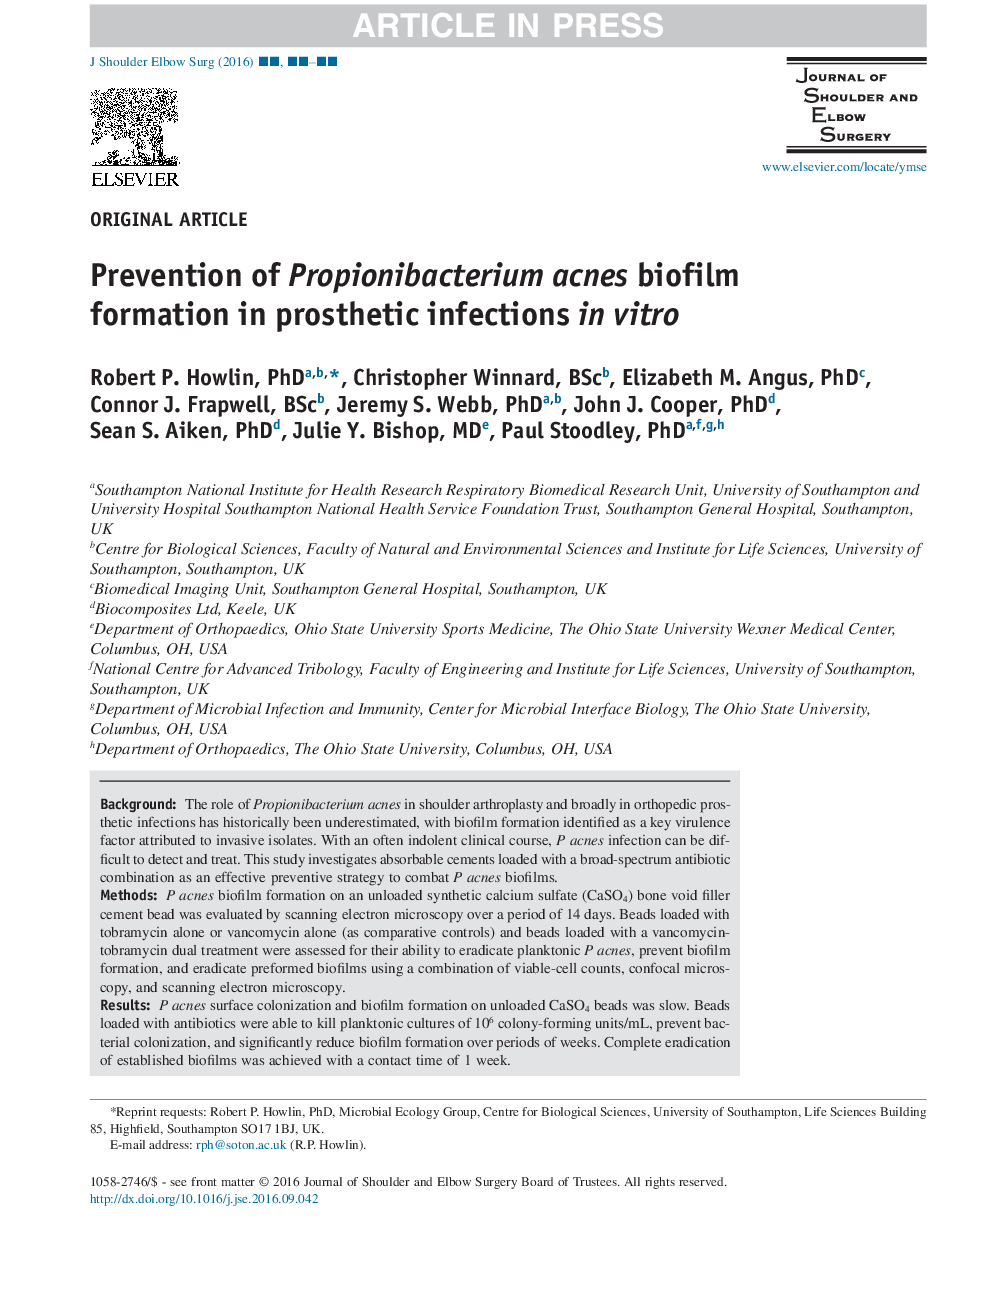 Prevention of Propionibacterium acnes biofilm formation in prosthetic infections in vitro